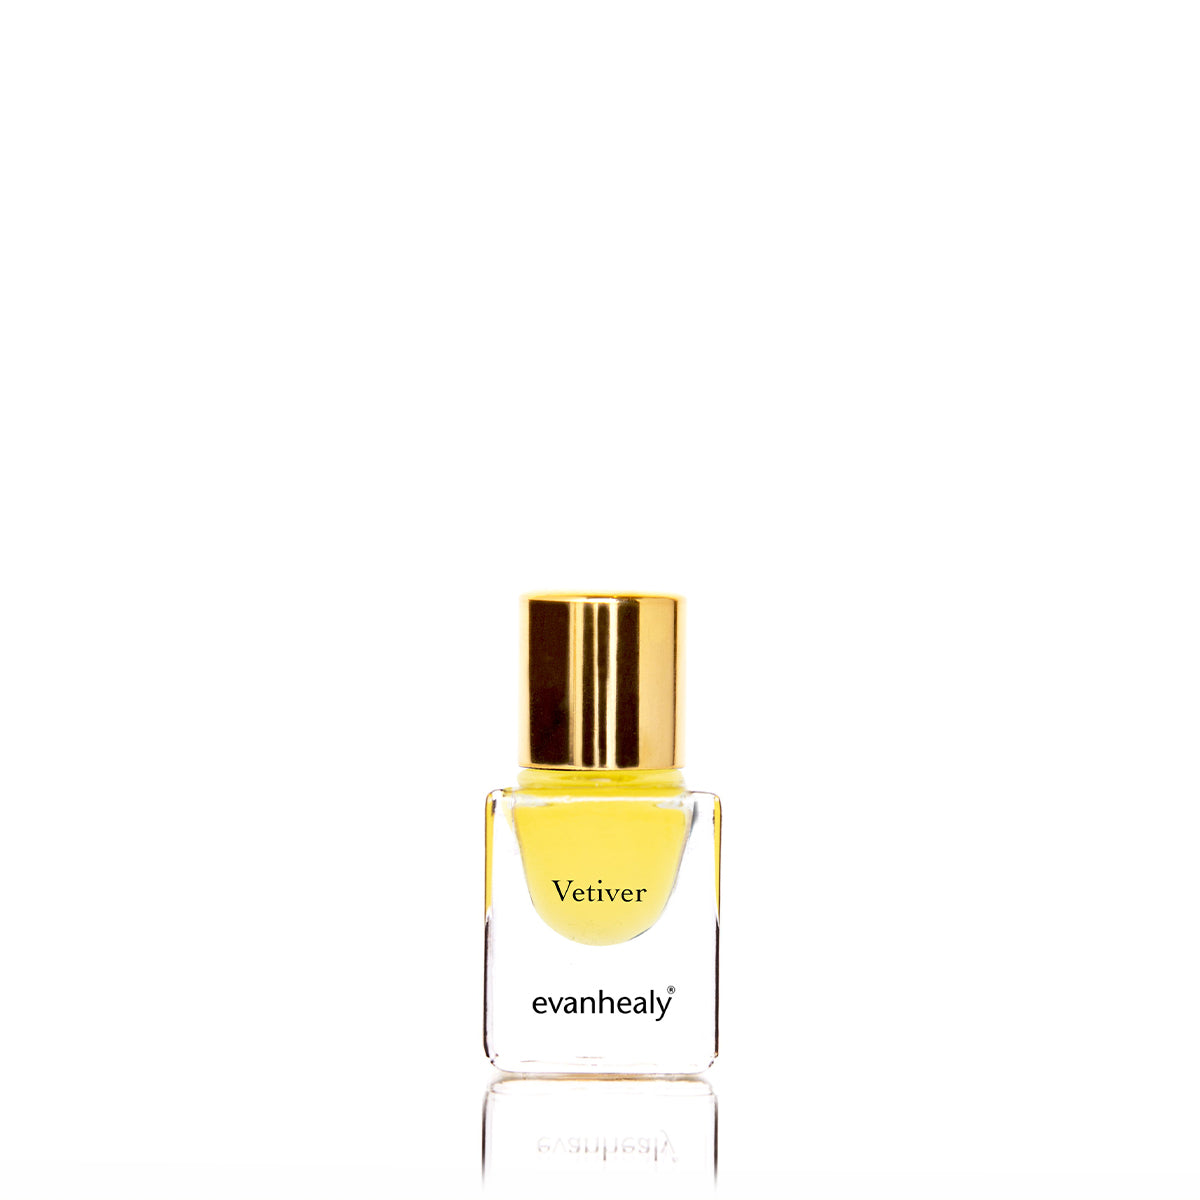 evanhealy vetiver essential oil perfume